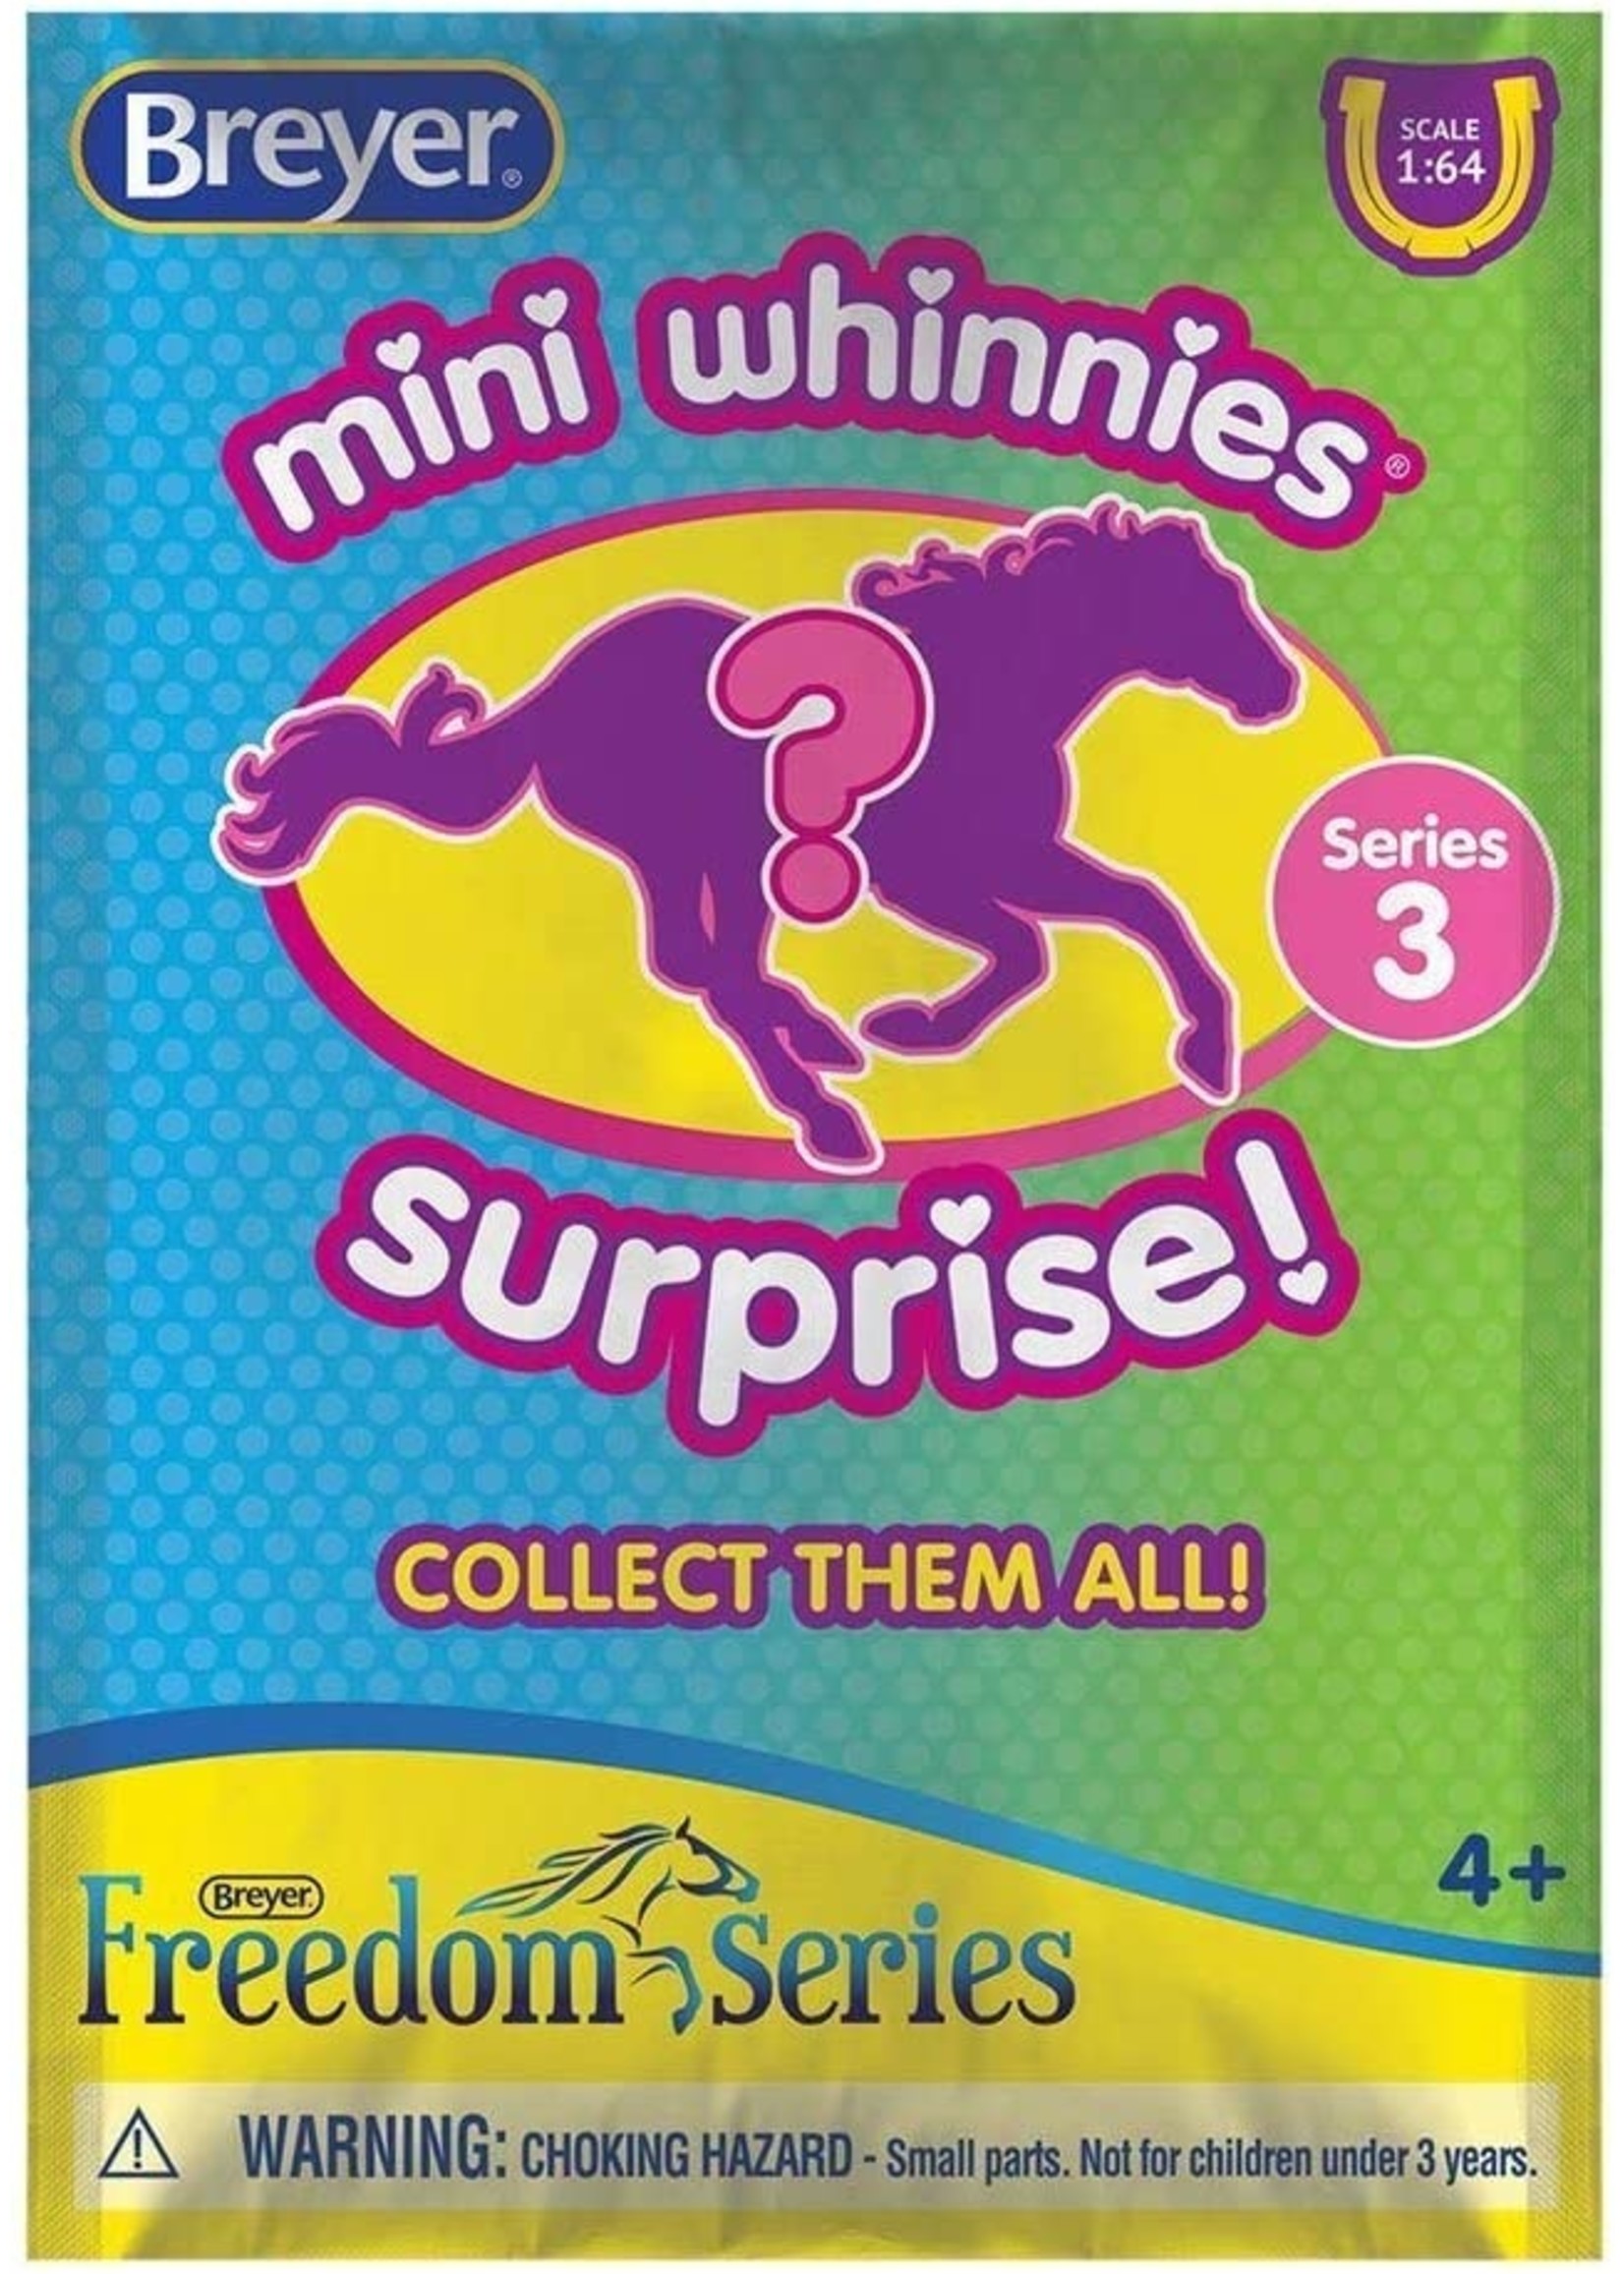 Breyer Mini Whinnies Surprise! - Series 3